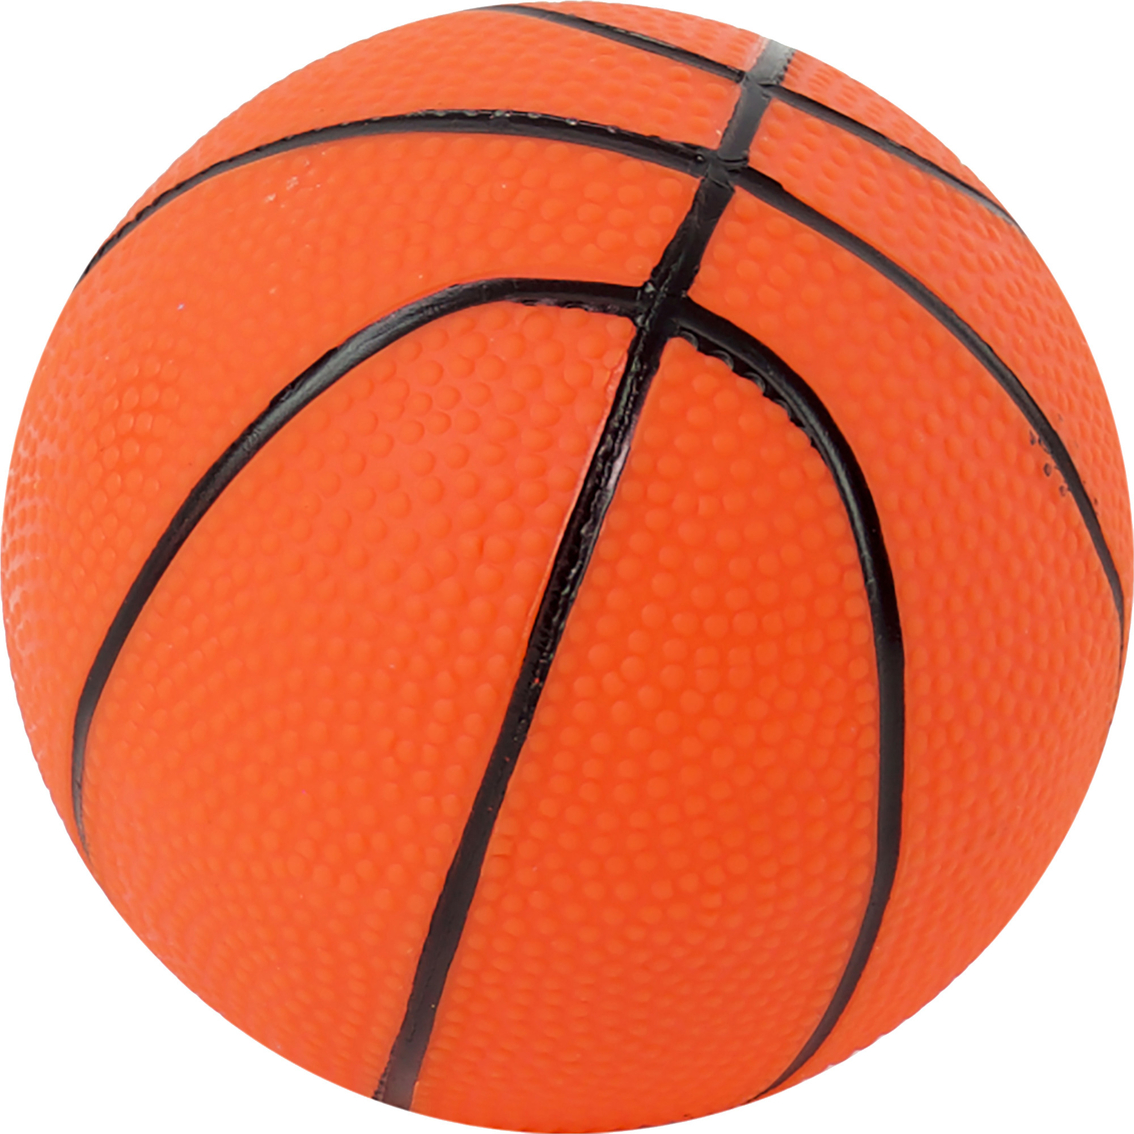 Maccabi Art Pro Ball Mini Air Slam Basketball Hoop Arcade Game, Adjustable Height - Image 8 of 9